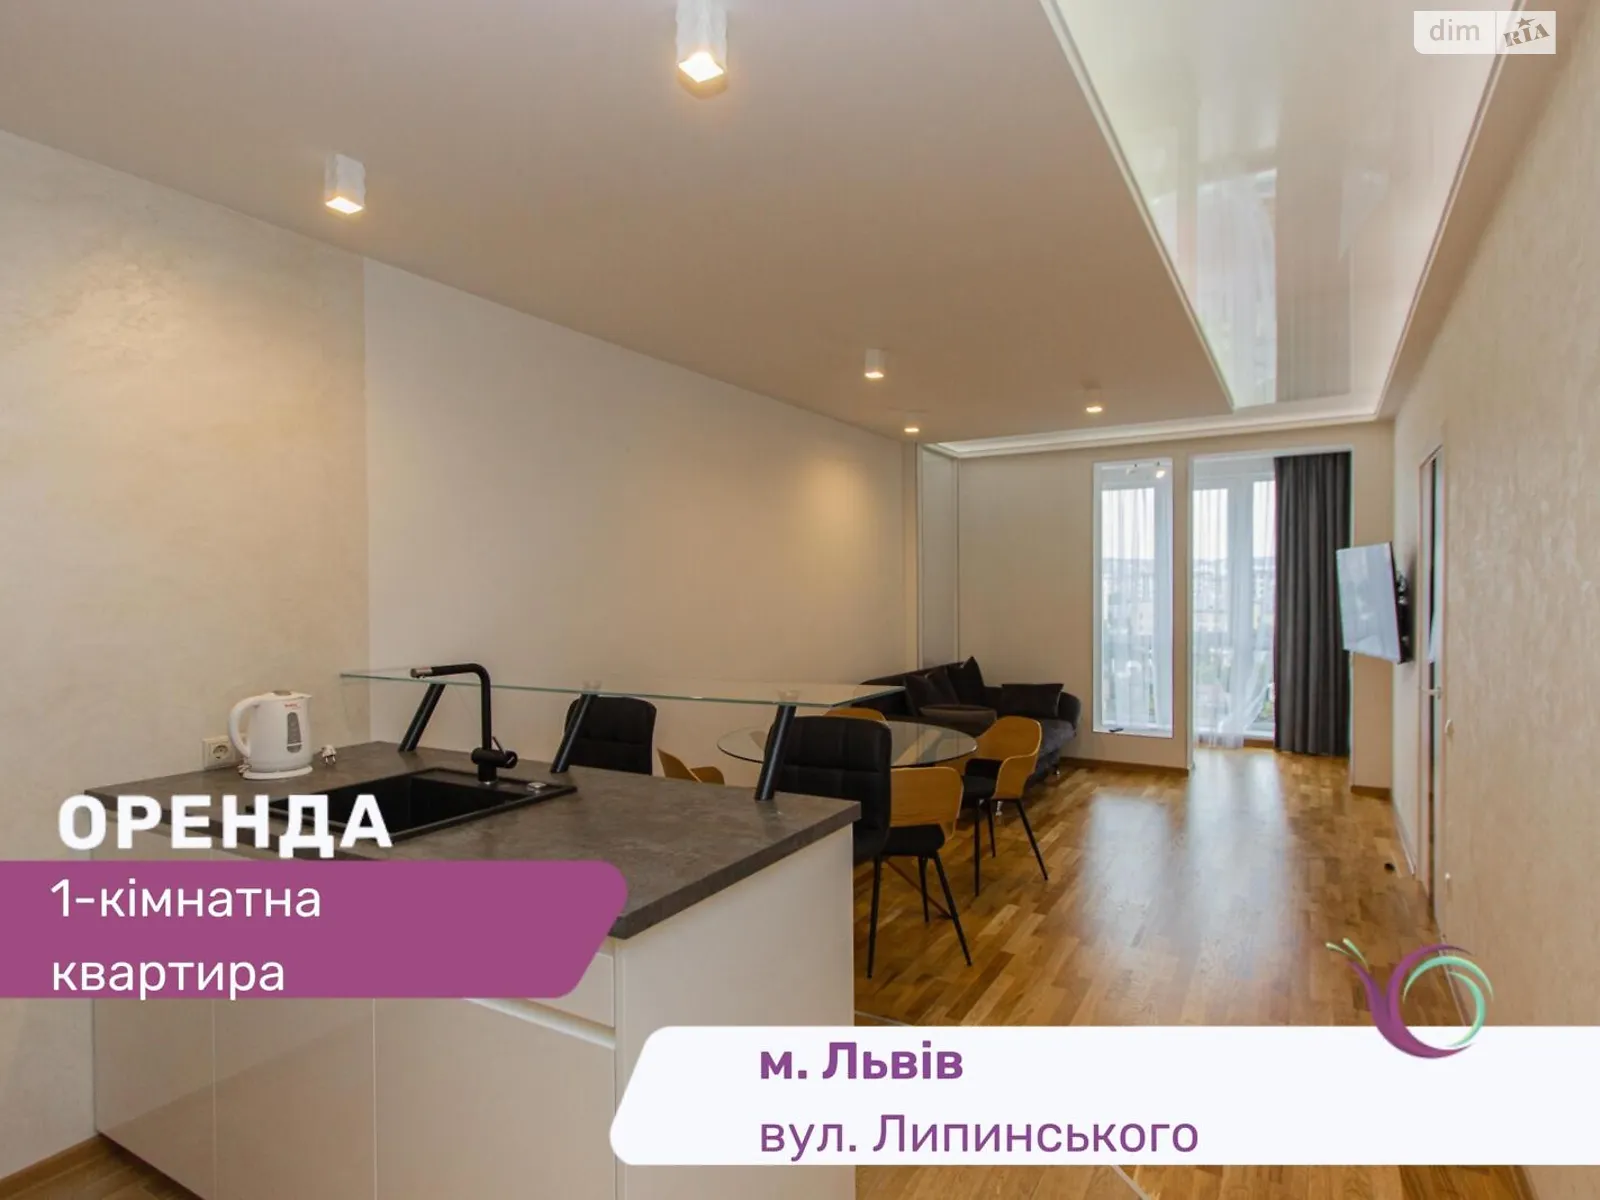 Сдается в аренду 1-комнатная квартира 57 кв. м в Львове, ул. Вячеслава Липинского - фото 1